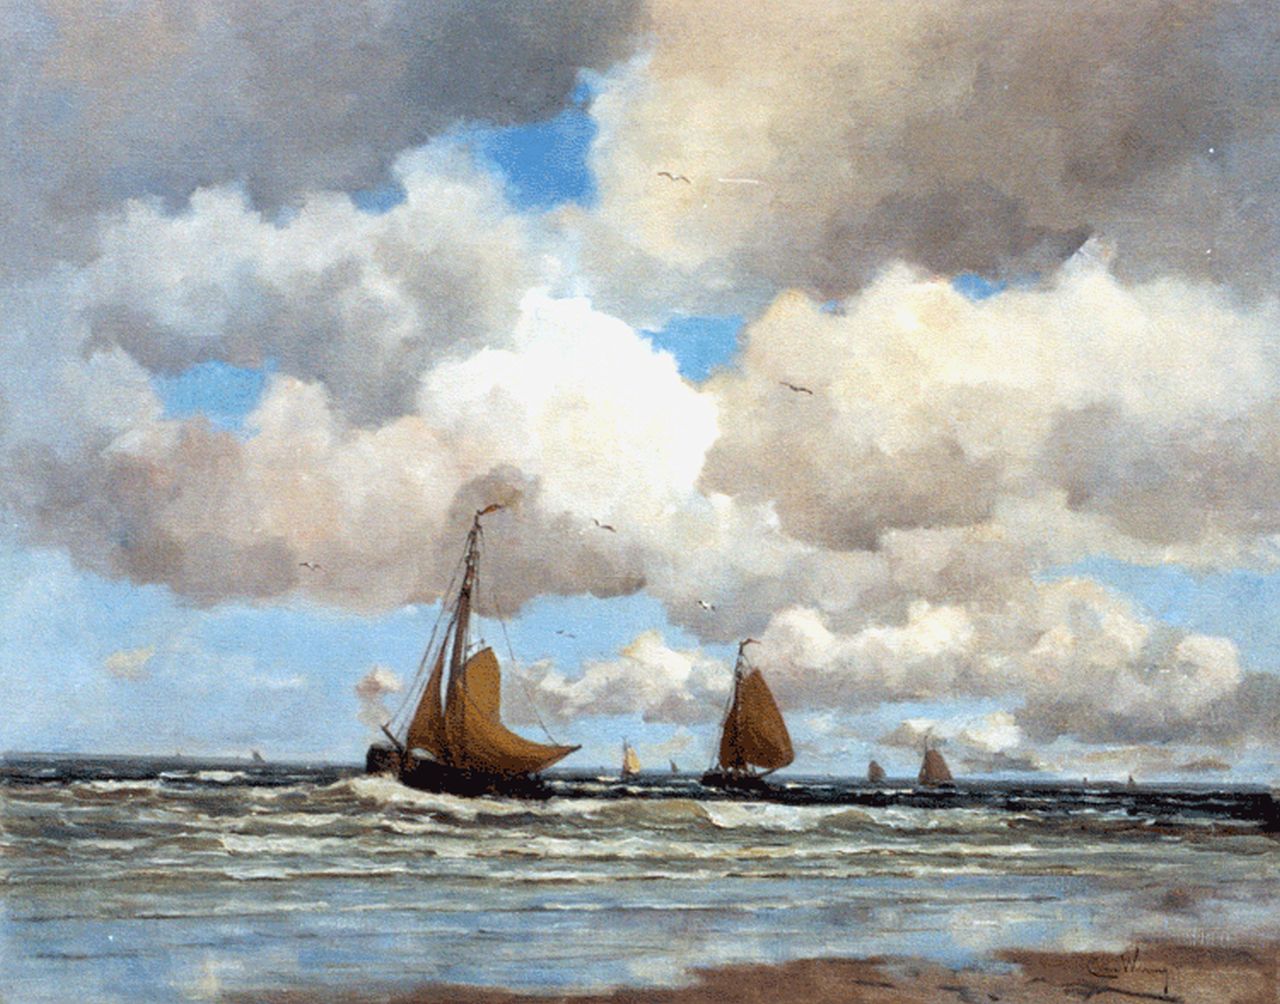 Waning C.A. van | Cornelis Anthonij 'Kees' van Waning, The arrival of the fleet, oil on canvas 78.0 x 98.0 cm, signed l.r.